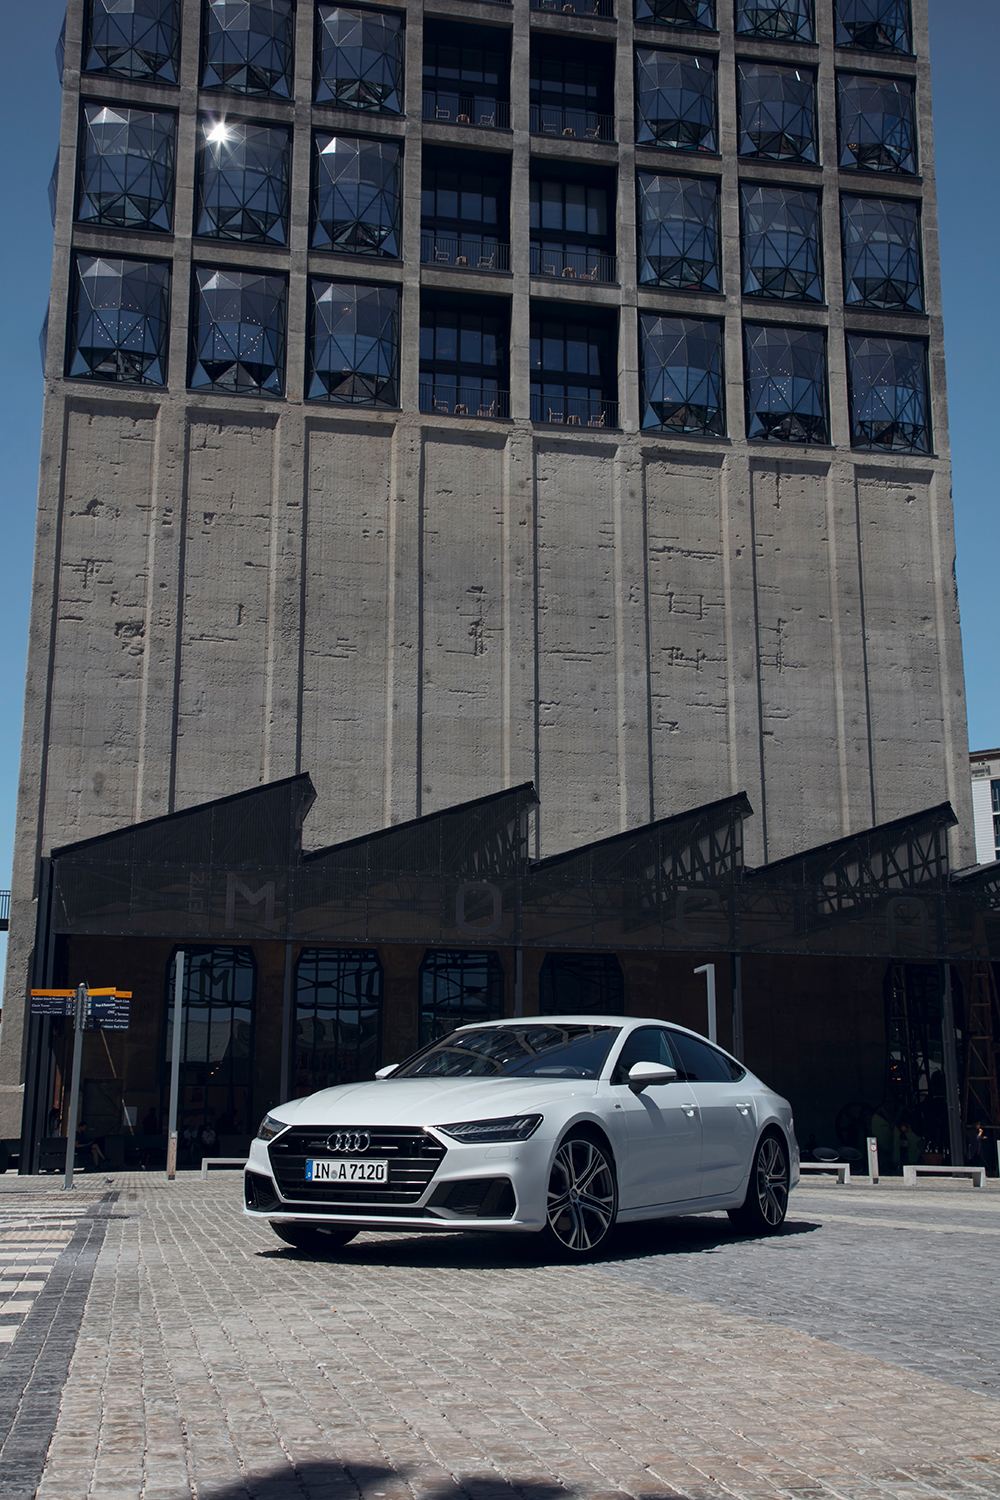 Audi_A7_Kapstadt_2018_bubbers-1035